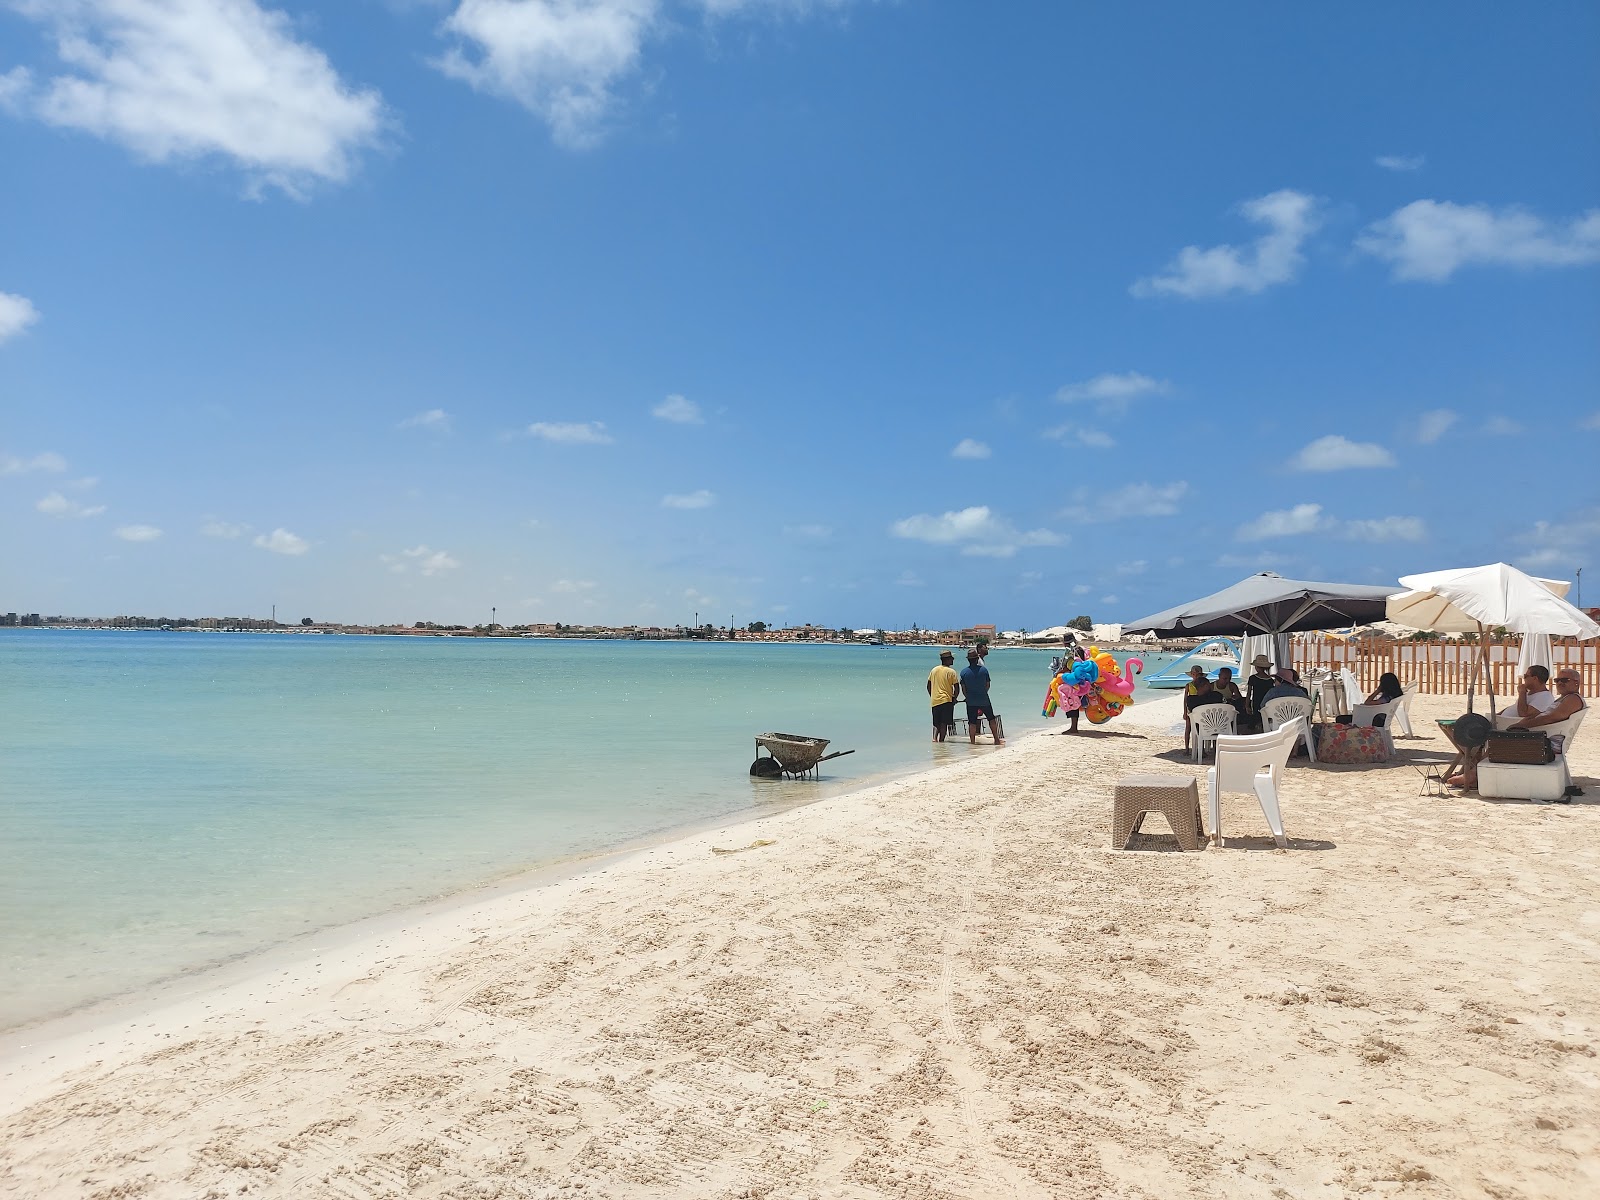 Foto di Eagles Resort in Cleopatra Beach con una superficie del sabbia luminosa